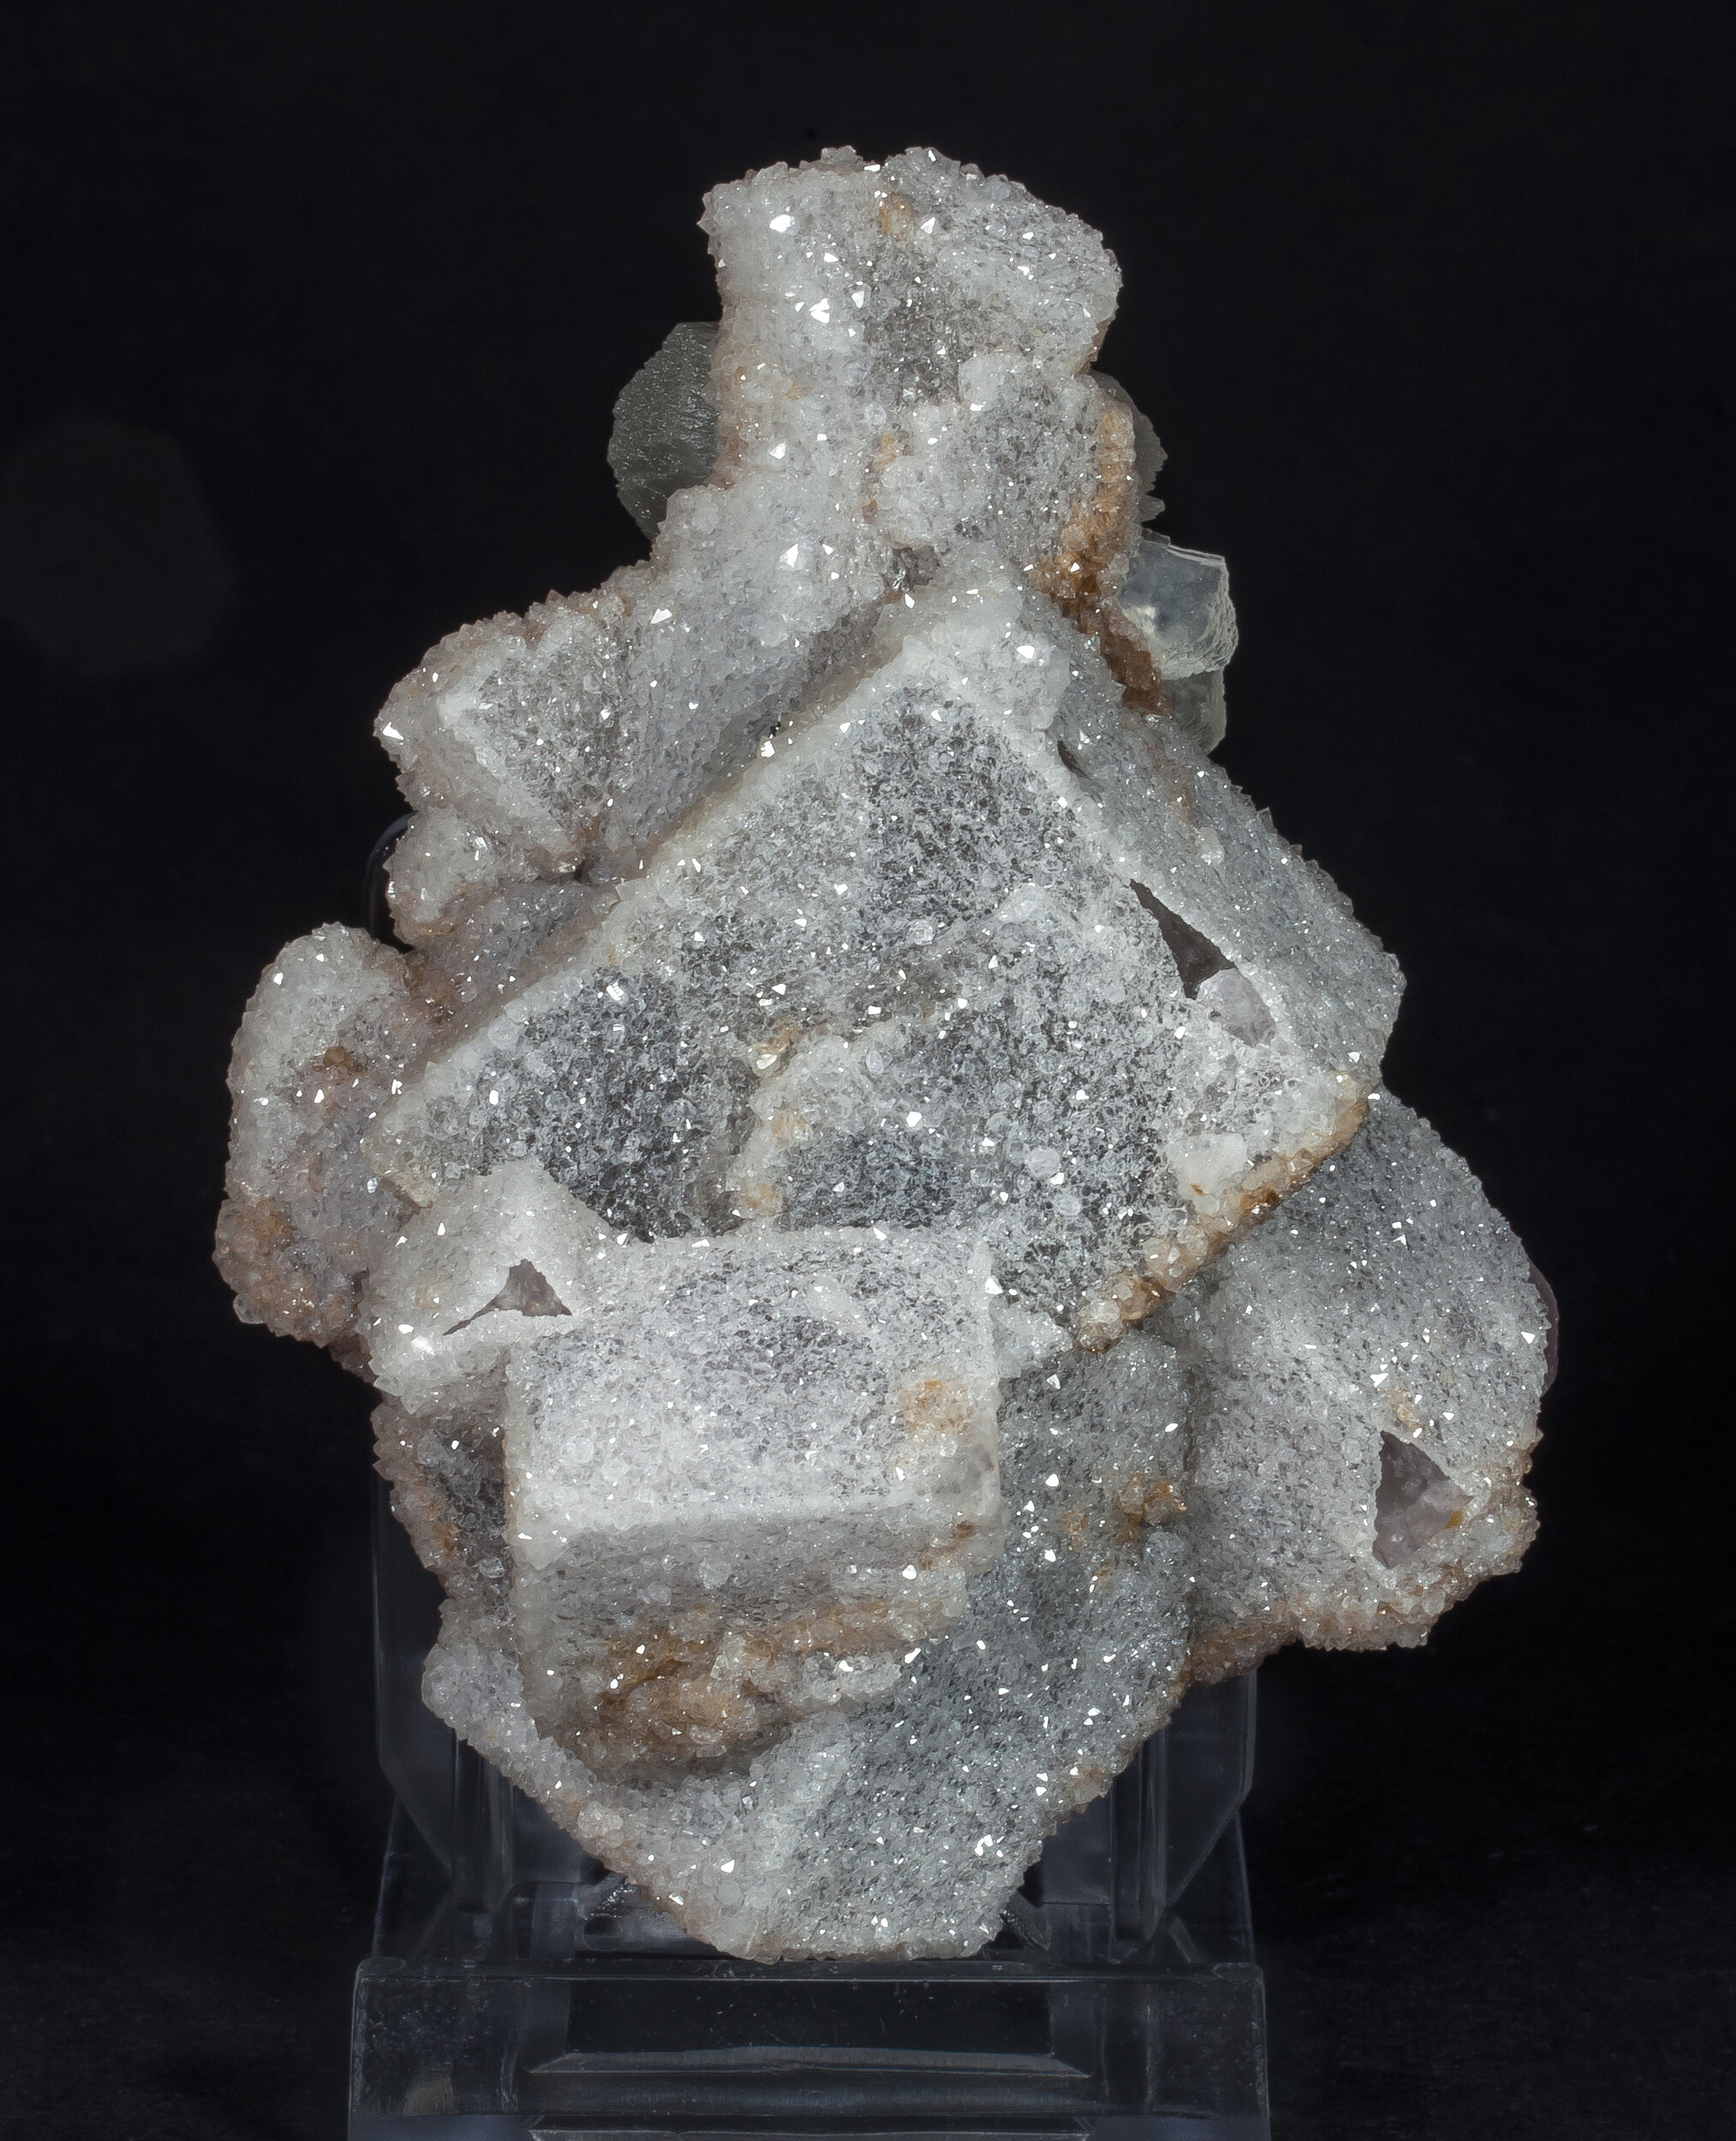 specimens/s_imagesAO2/Fluorite-MHR99AO2s.jpg